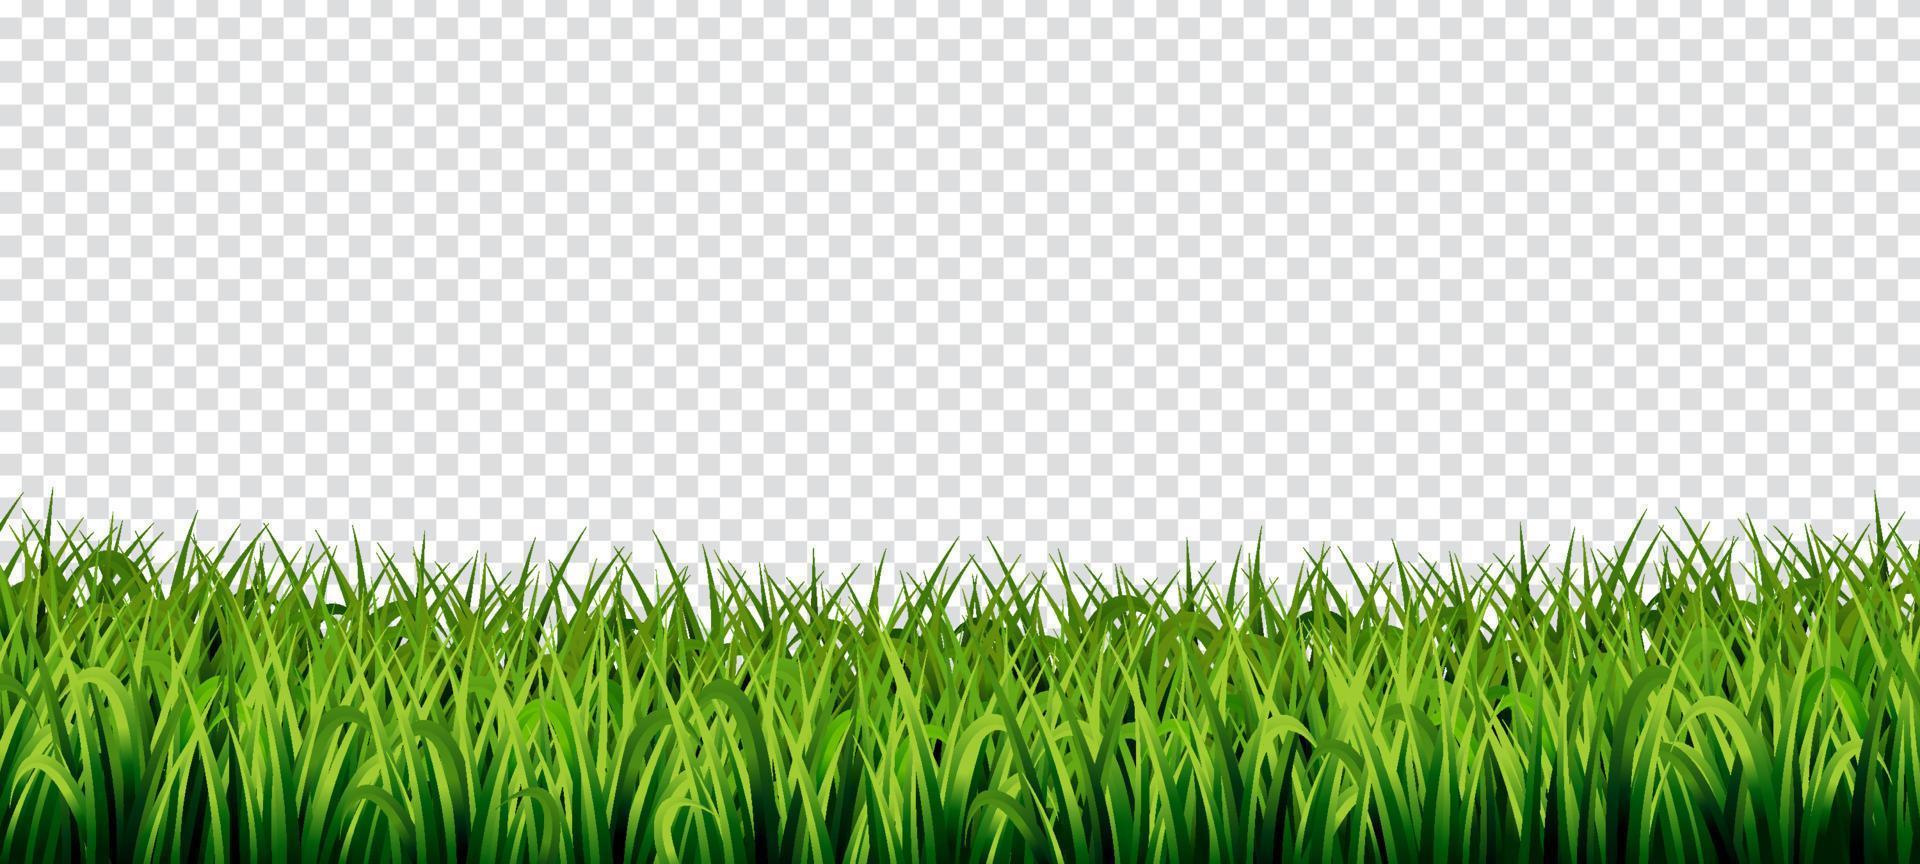 gras transparante achtergrond vector